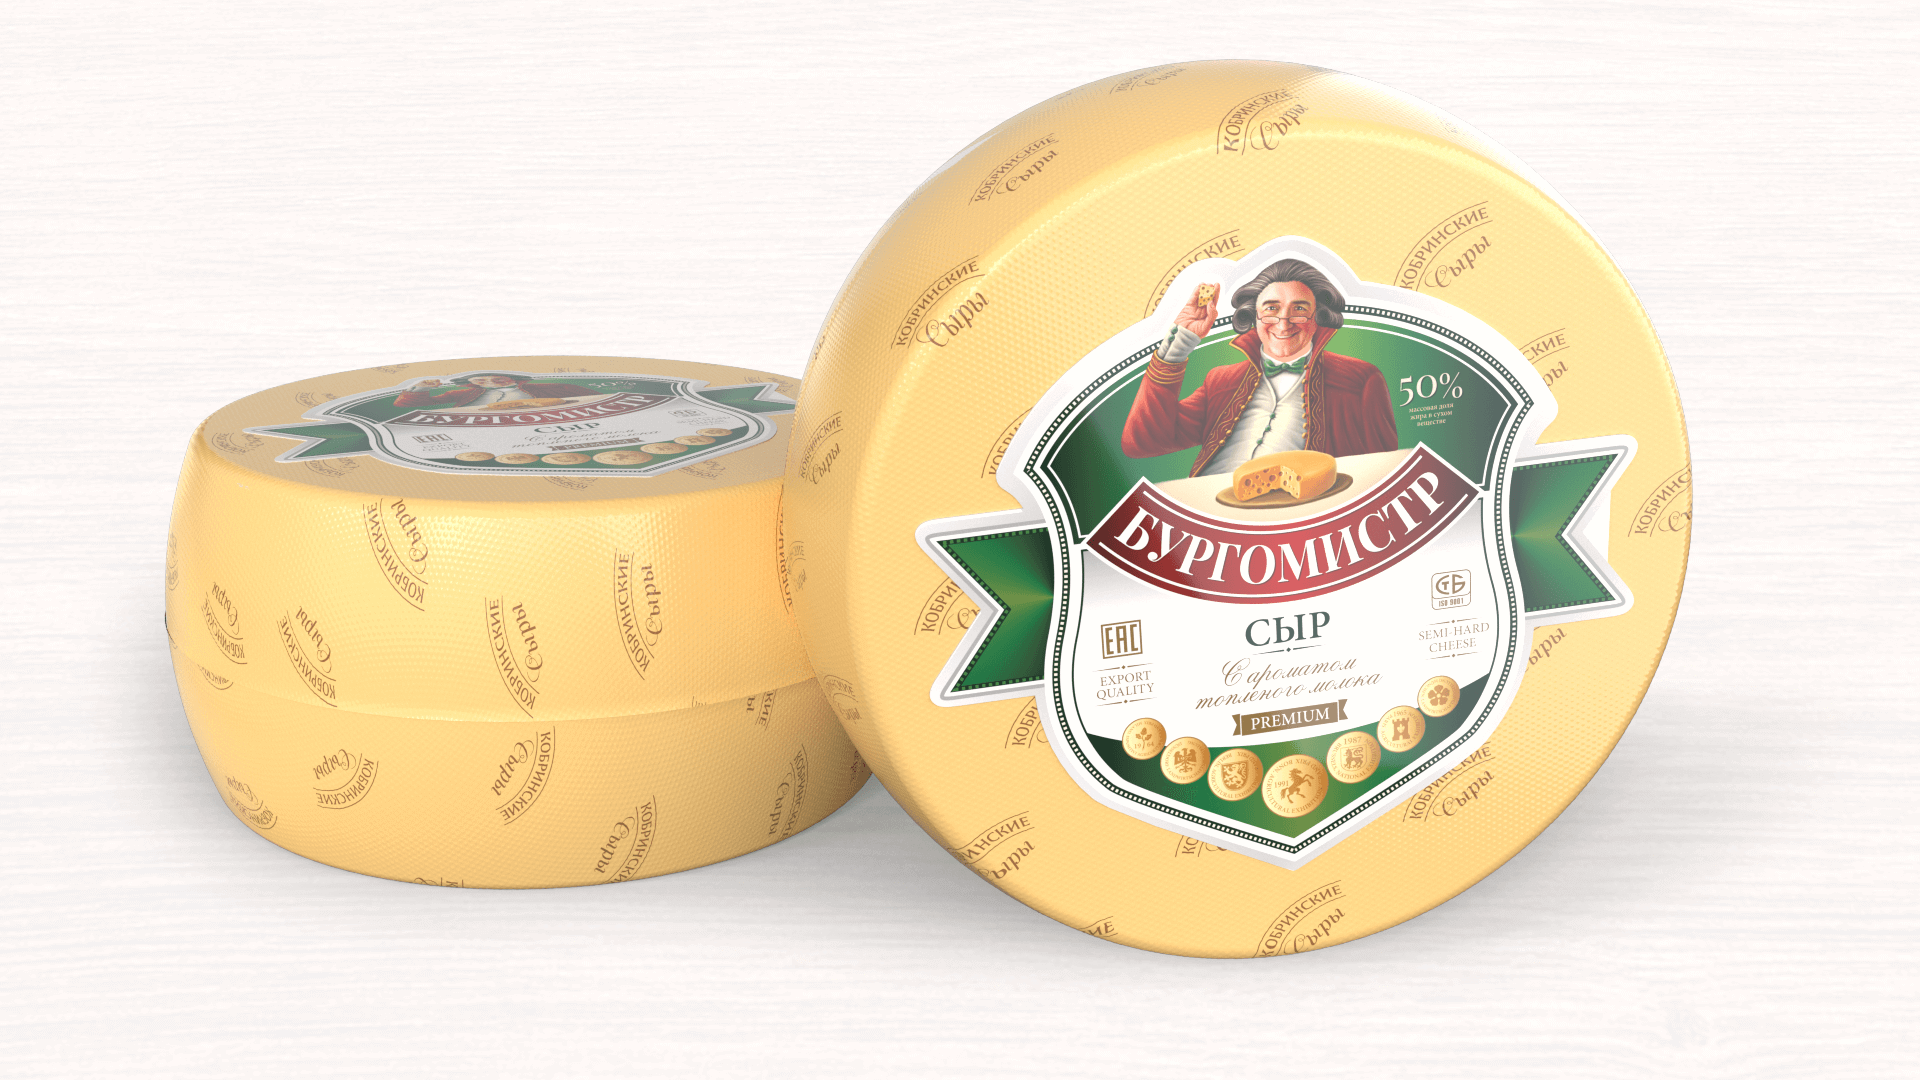 Сыр "БУРГОМИСТР" 50% с ароматом топленого молока | Интернет-магазин Gostpp